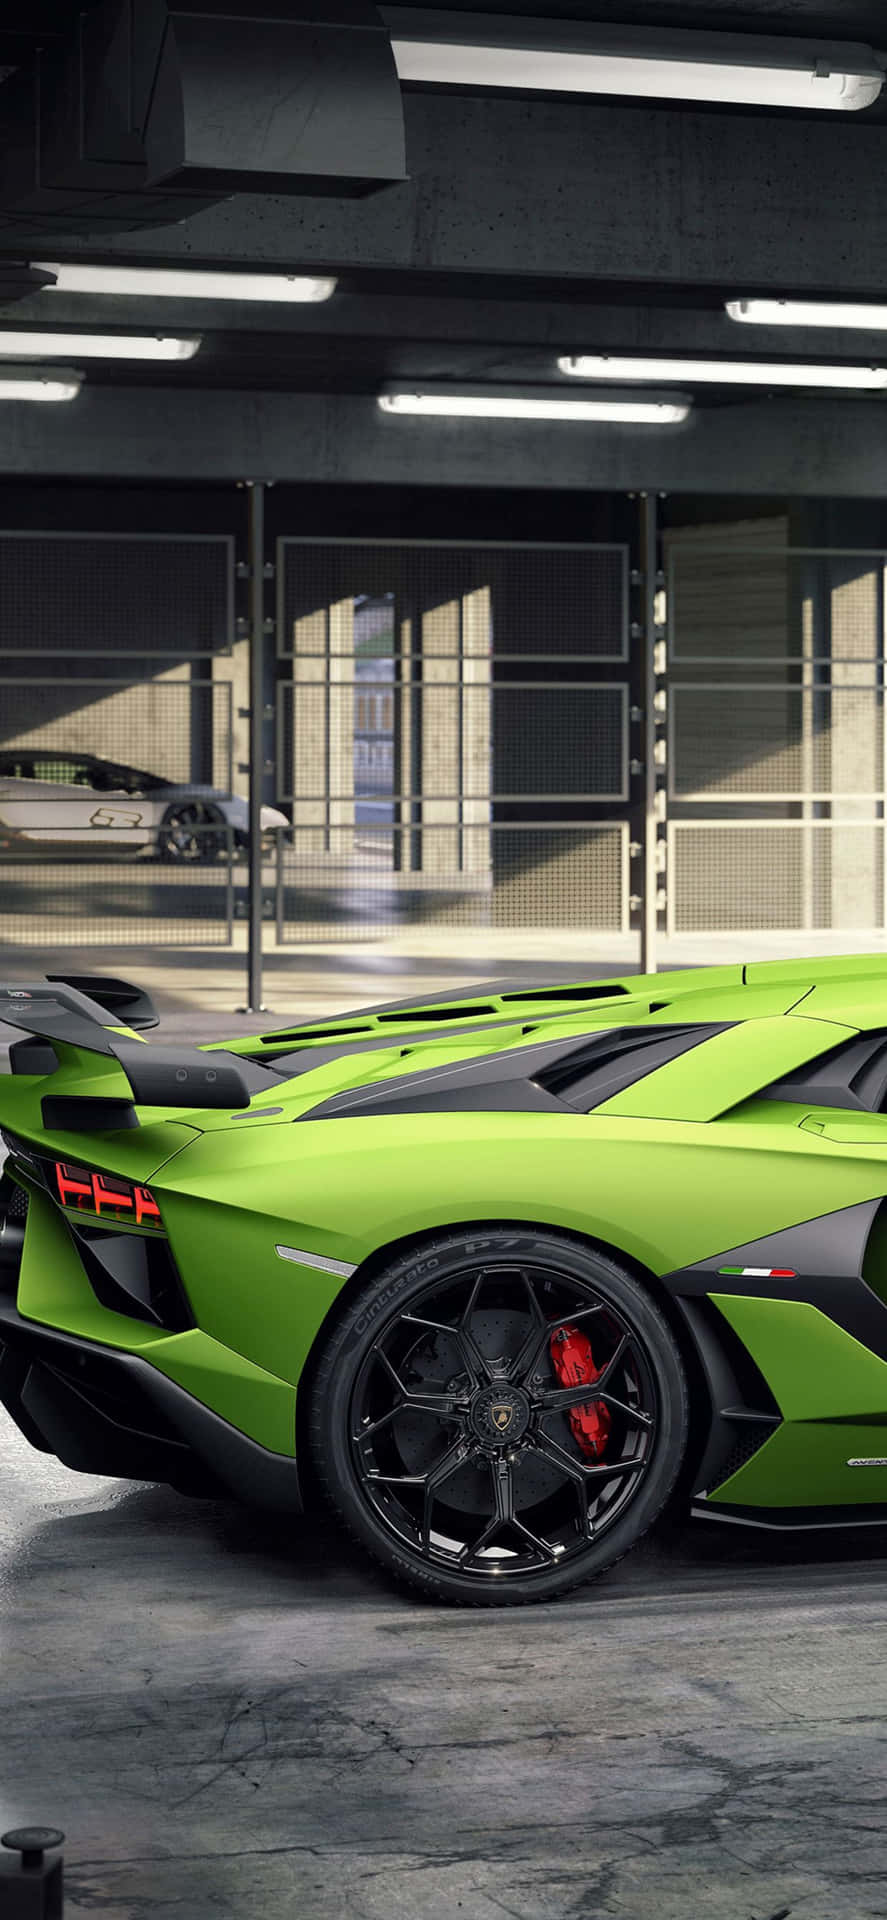 Enjoy the luxuries of life in a Green Lamborghini. Wallpaper